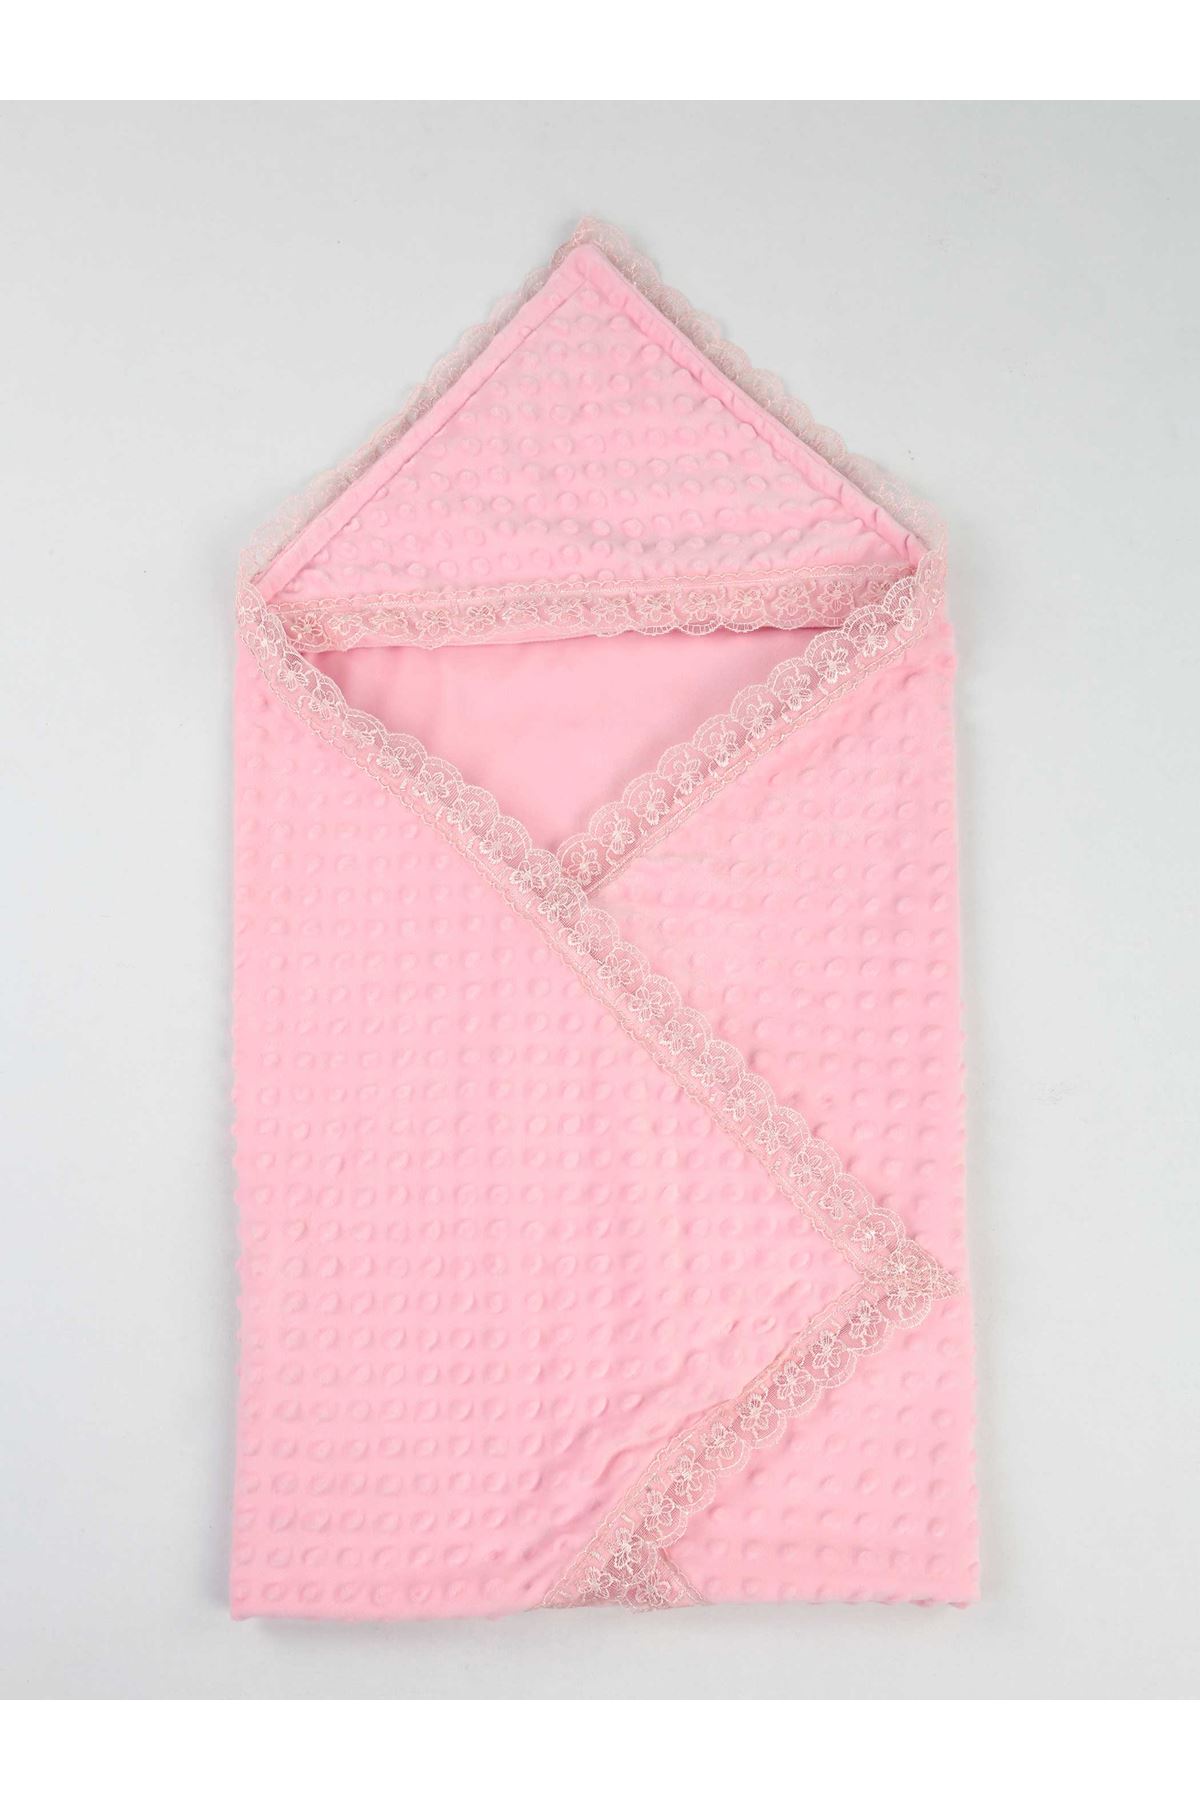 Pink 85 X85 cm Girl Baby Swaddle Blanket